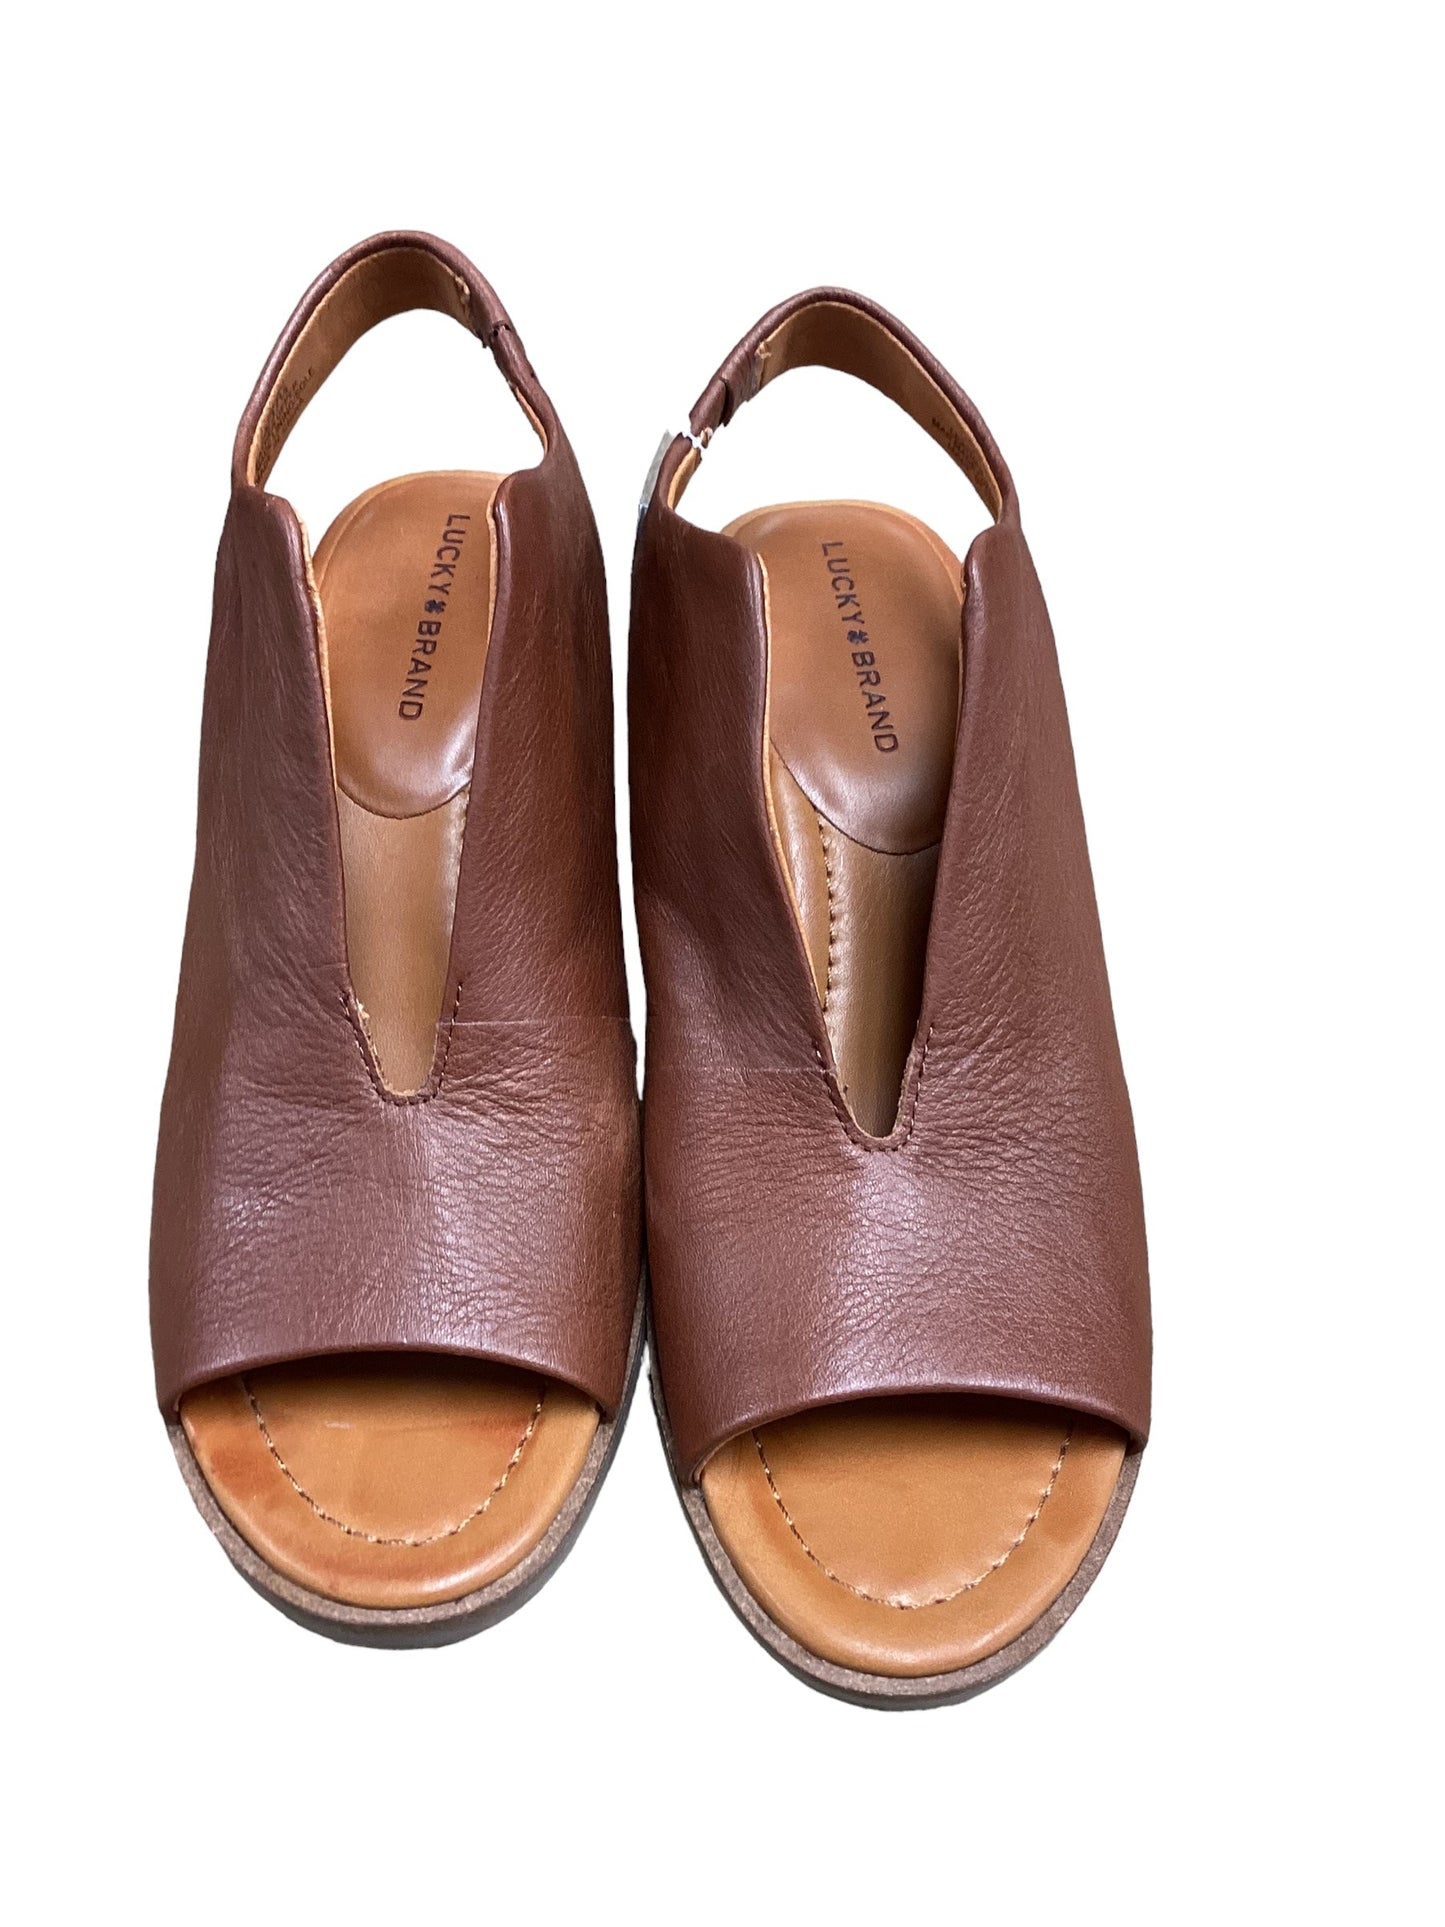 Brown Sandals Heels Block Lucky Brand, Size 7